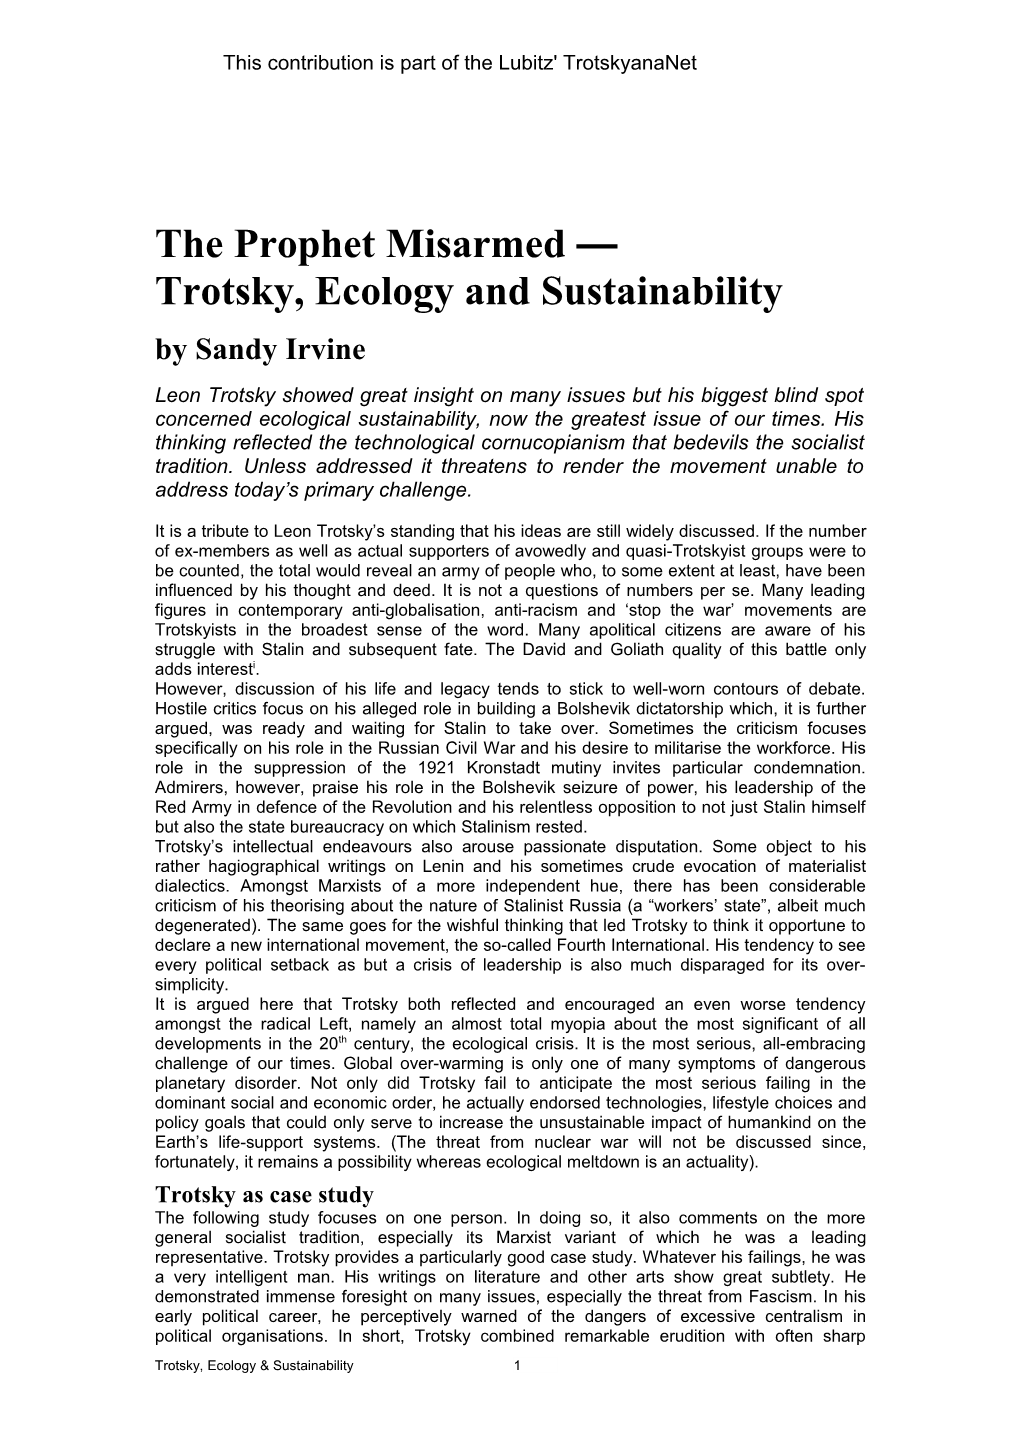 Sandy Irvine: the Prophet Misarmed — Trotsky, Ecology and Sustainability